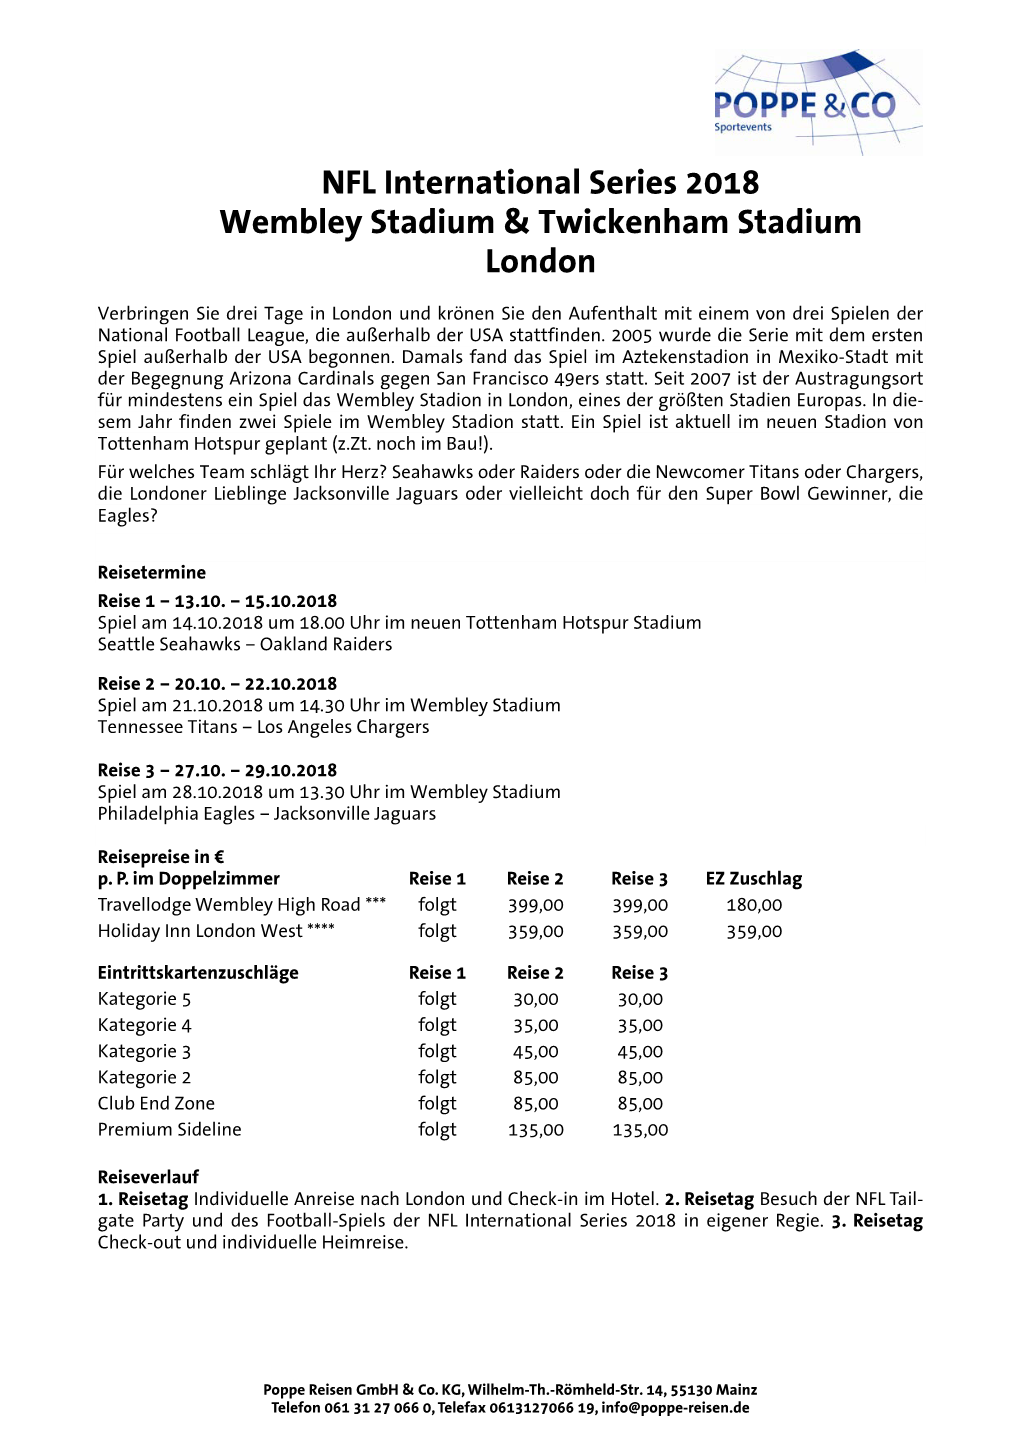 NFL International Series 2018 Wembley Stadium & Twickenham